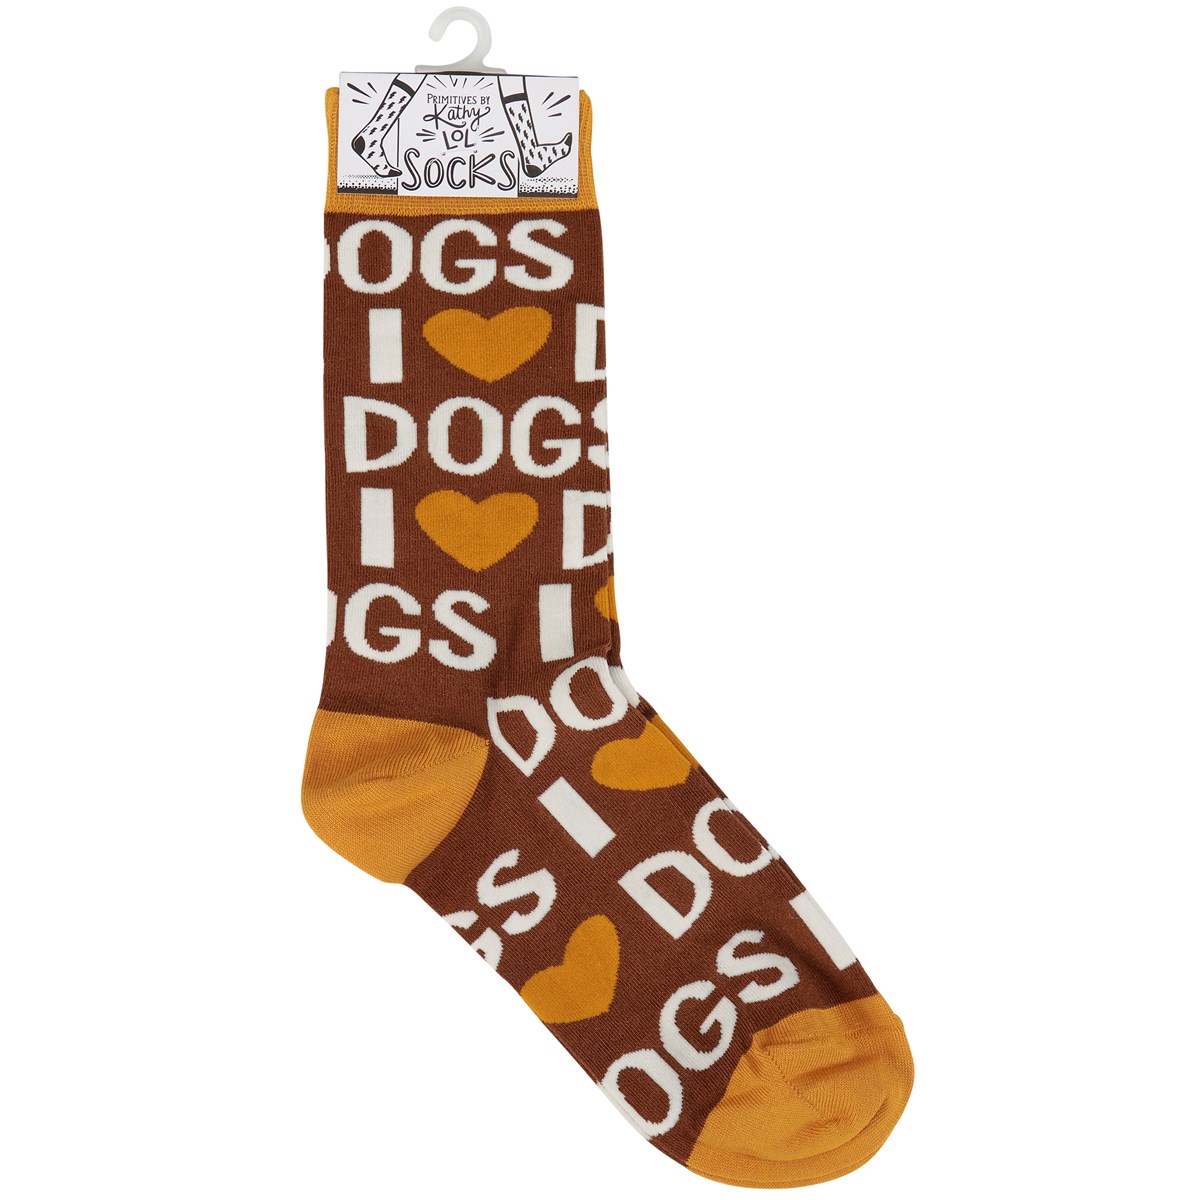 I Love Dogs Socks - Cotton, Nylon, Spandex